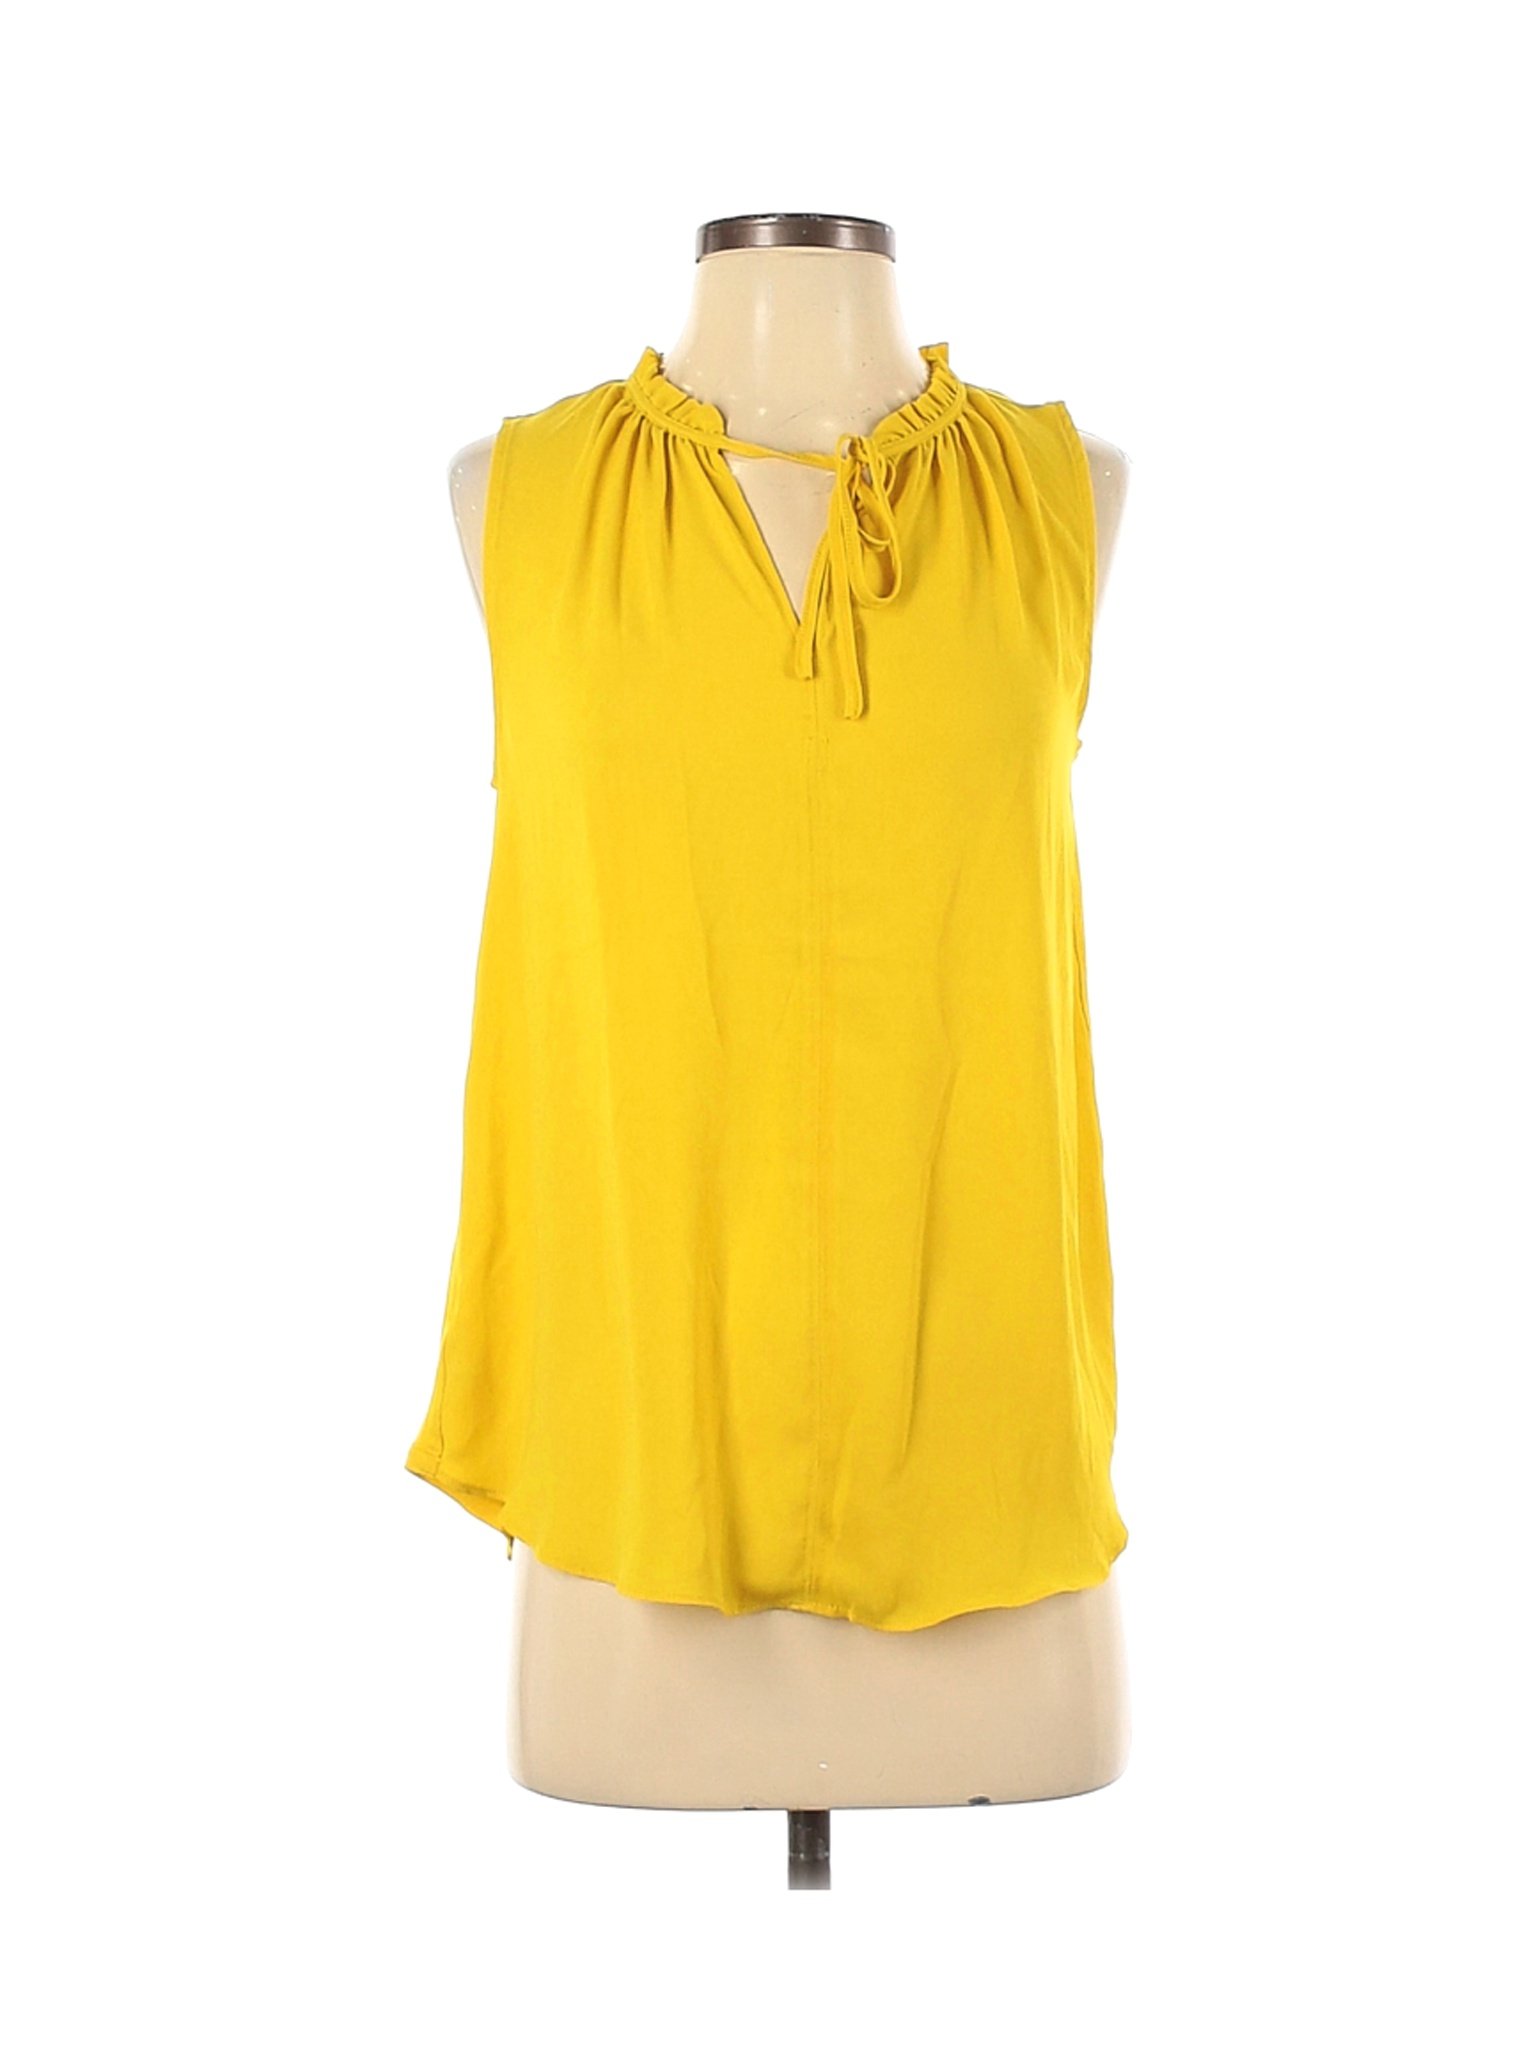 Ann Taylor LOFT Women Yellow Sleeveless Blouse S | eBay